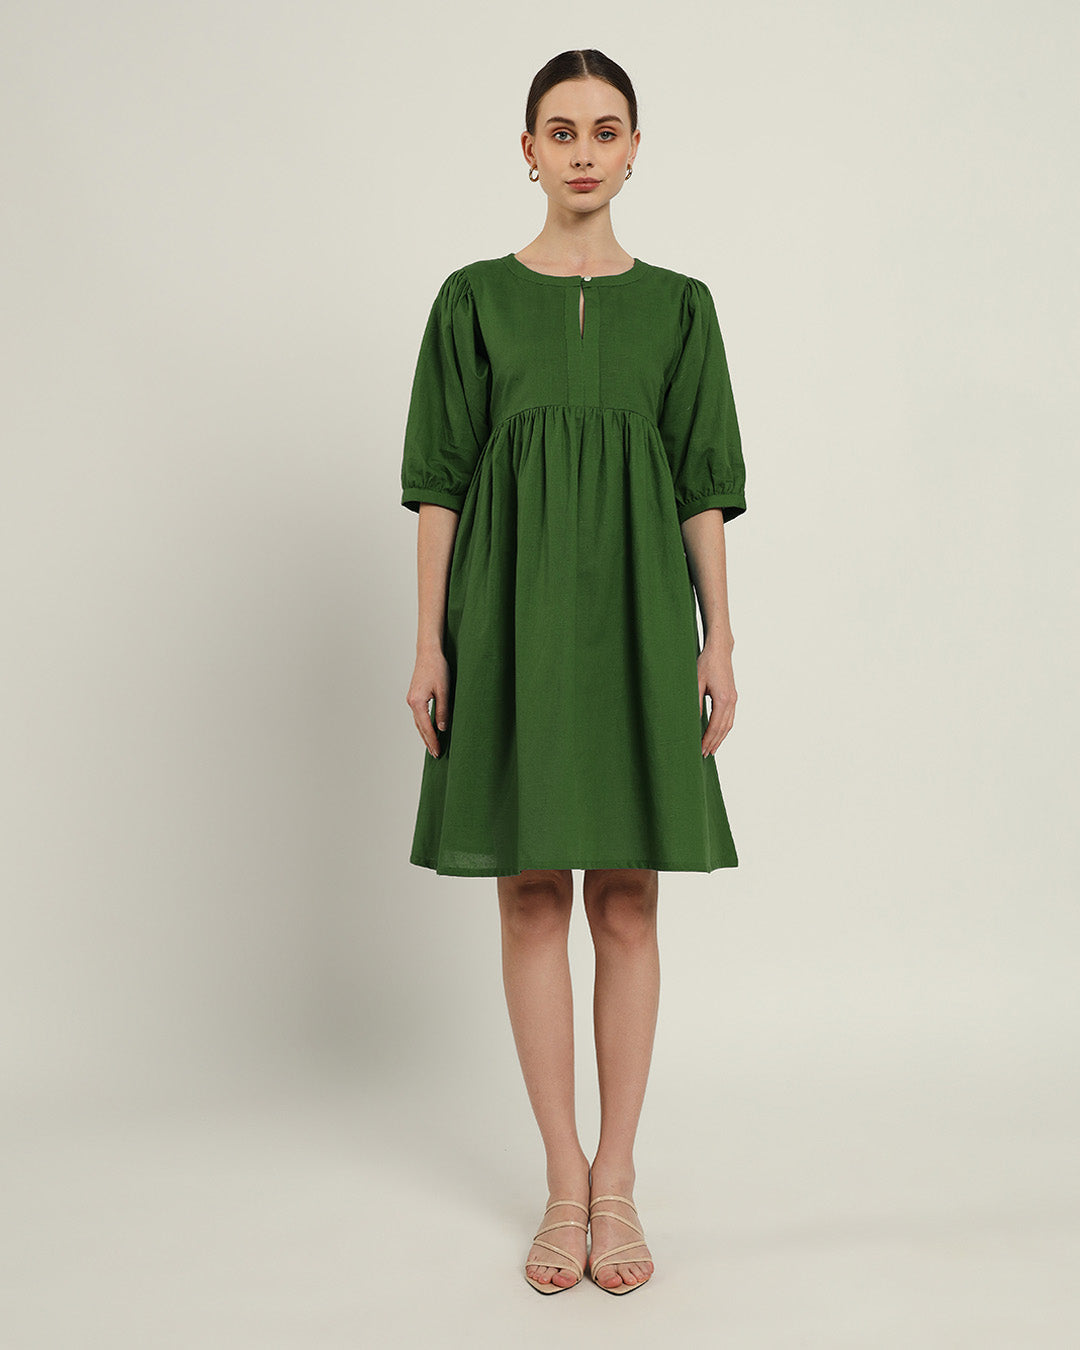 The Aira Emerald Dress